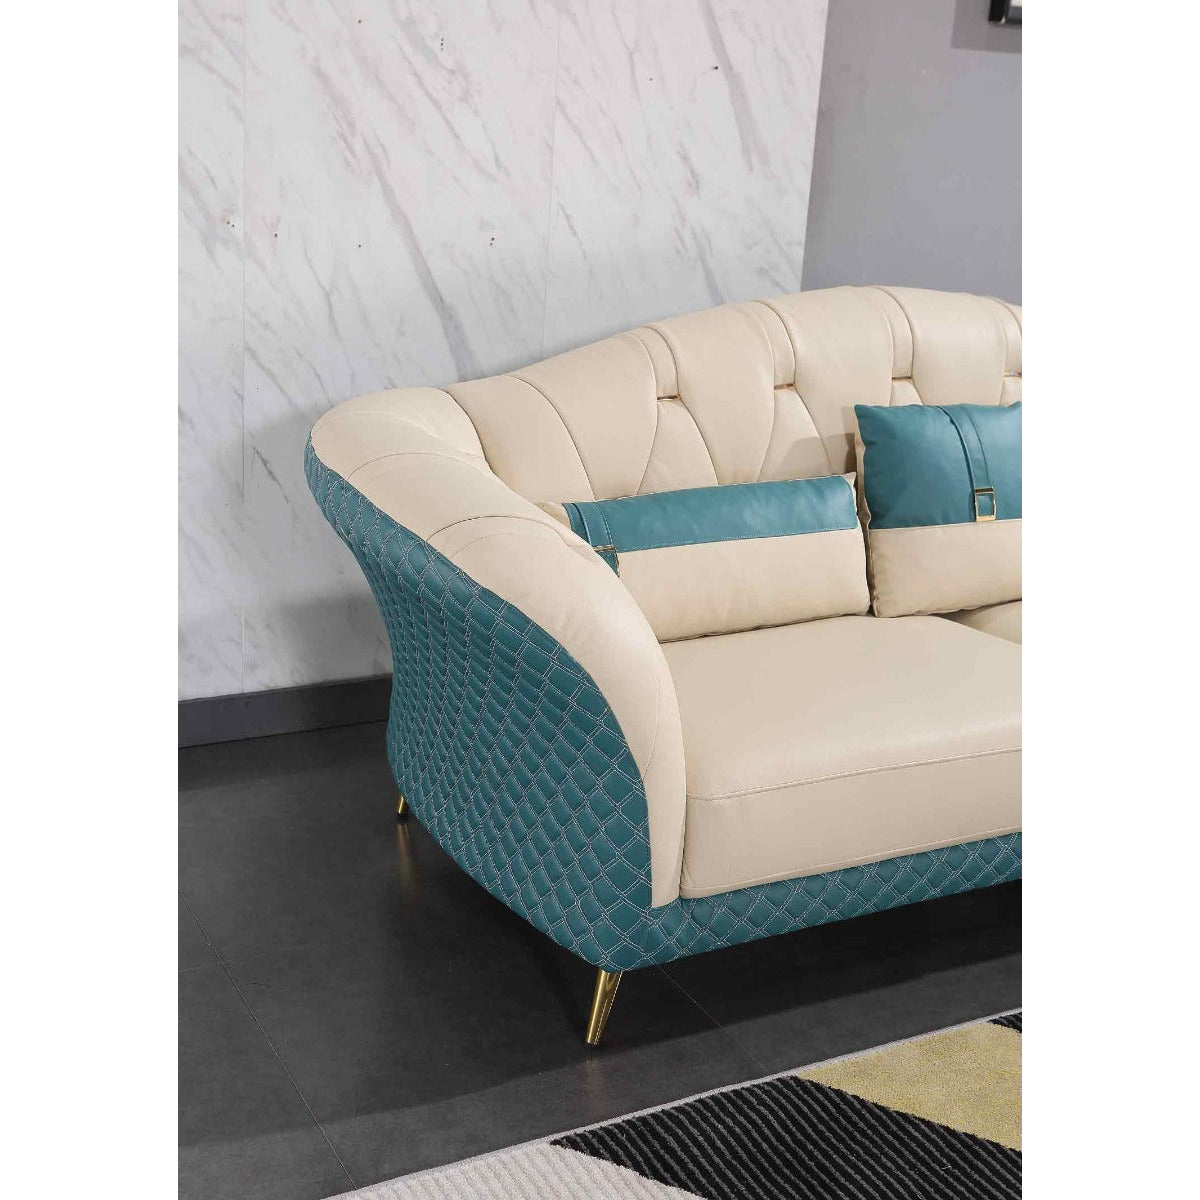 European Furniture - Amalia 2 Piece Living Room Set in White-Blue - 28042-2SET - New Star Living